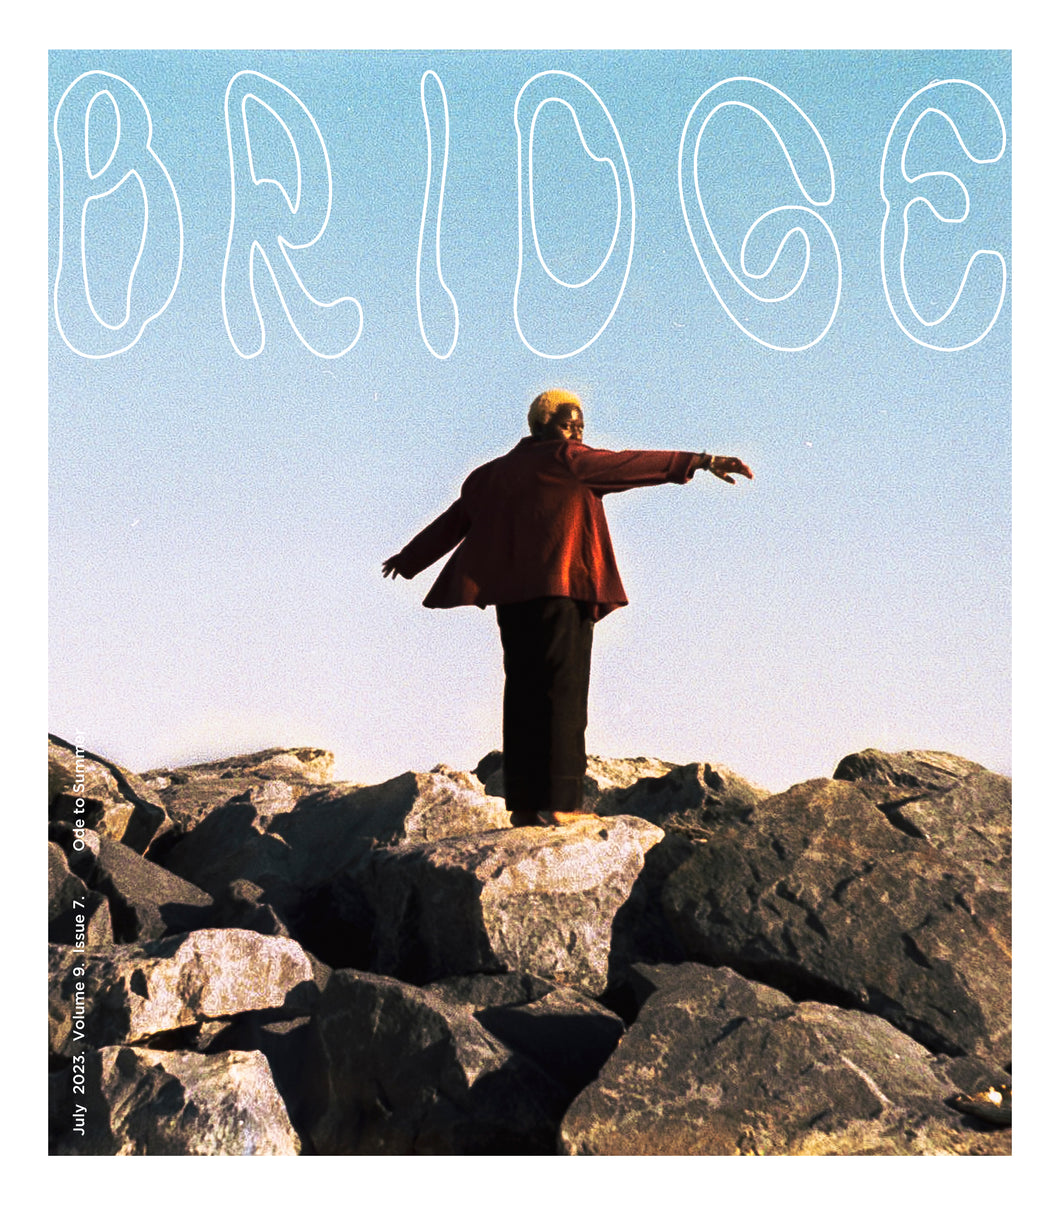 Bridge July '23 Issue